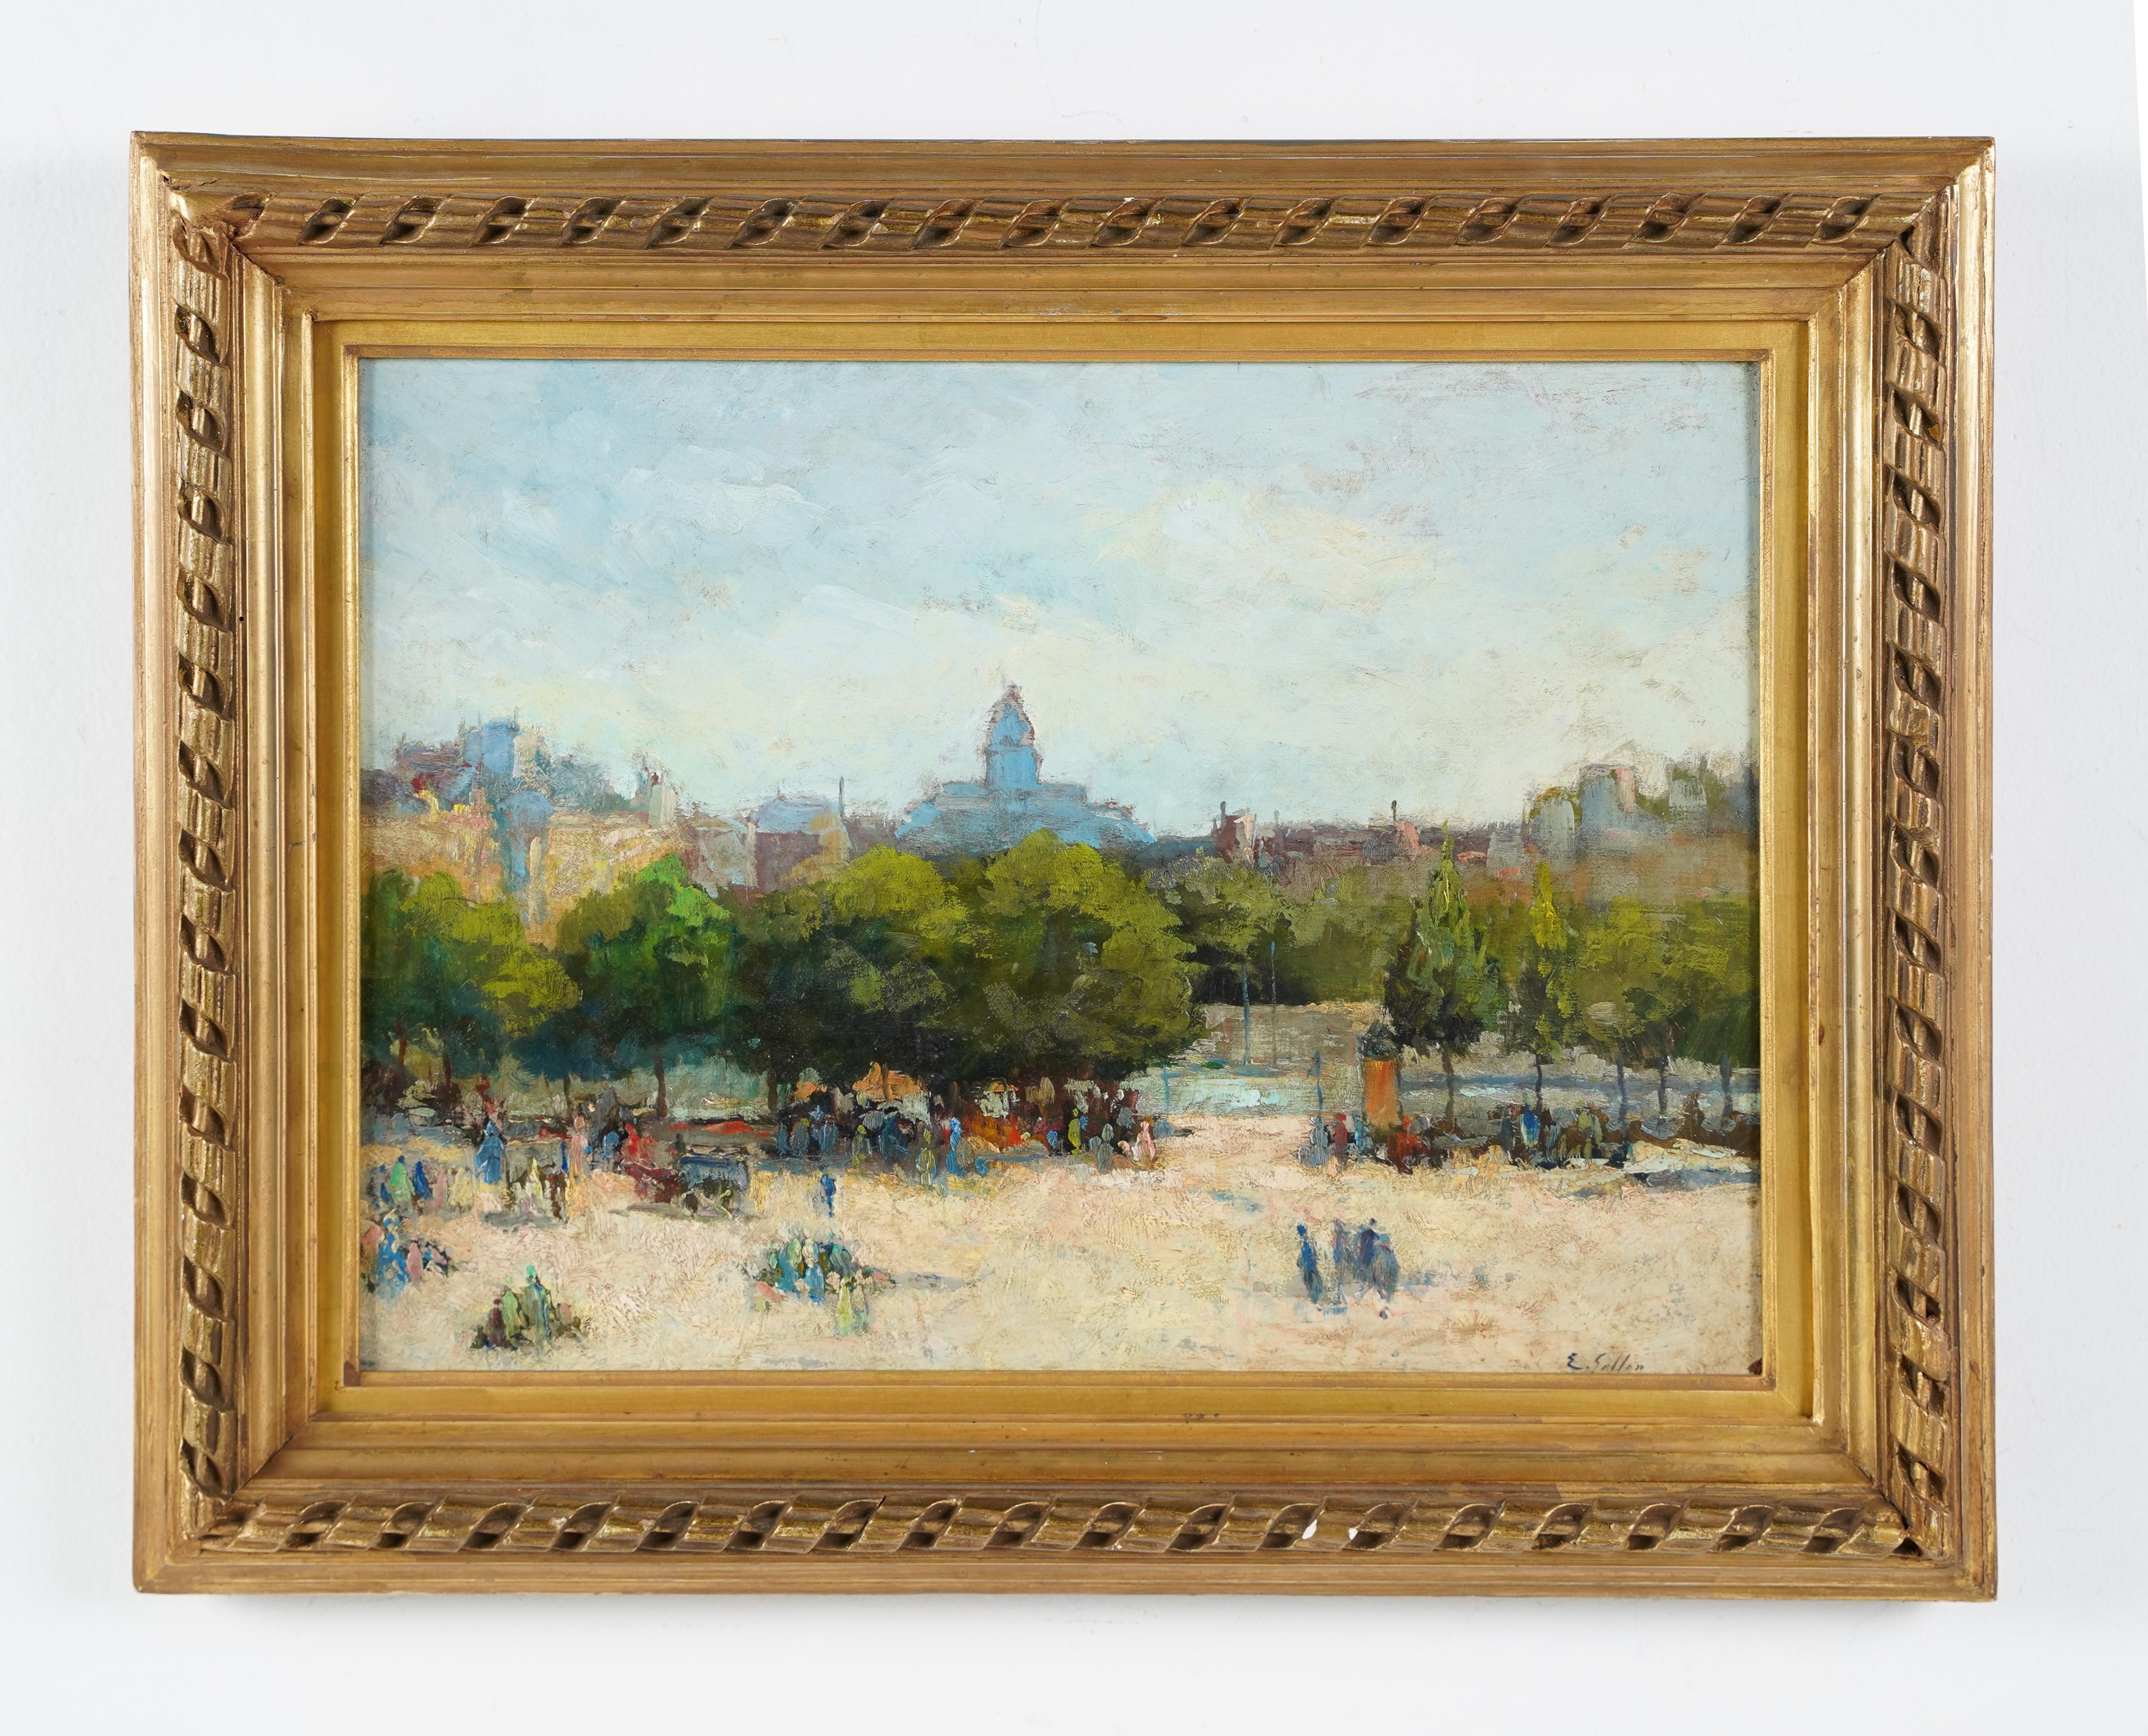 Antique French impressionist signed landscape oil painting.  Oil on board.  Signed.  Framed.  Image size, 15.5L x 11.5H.